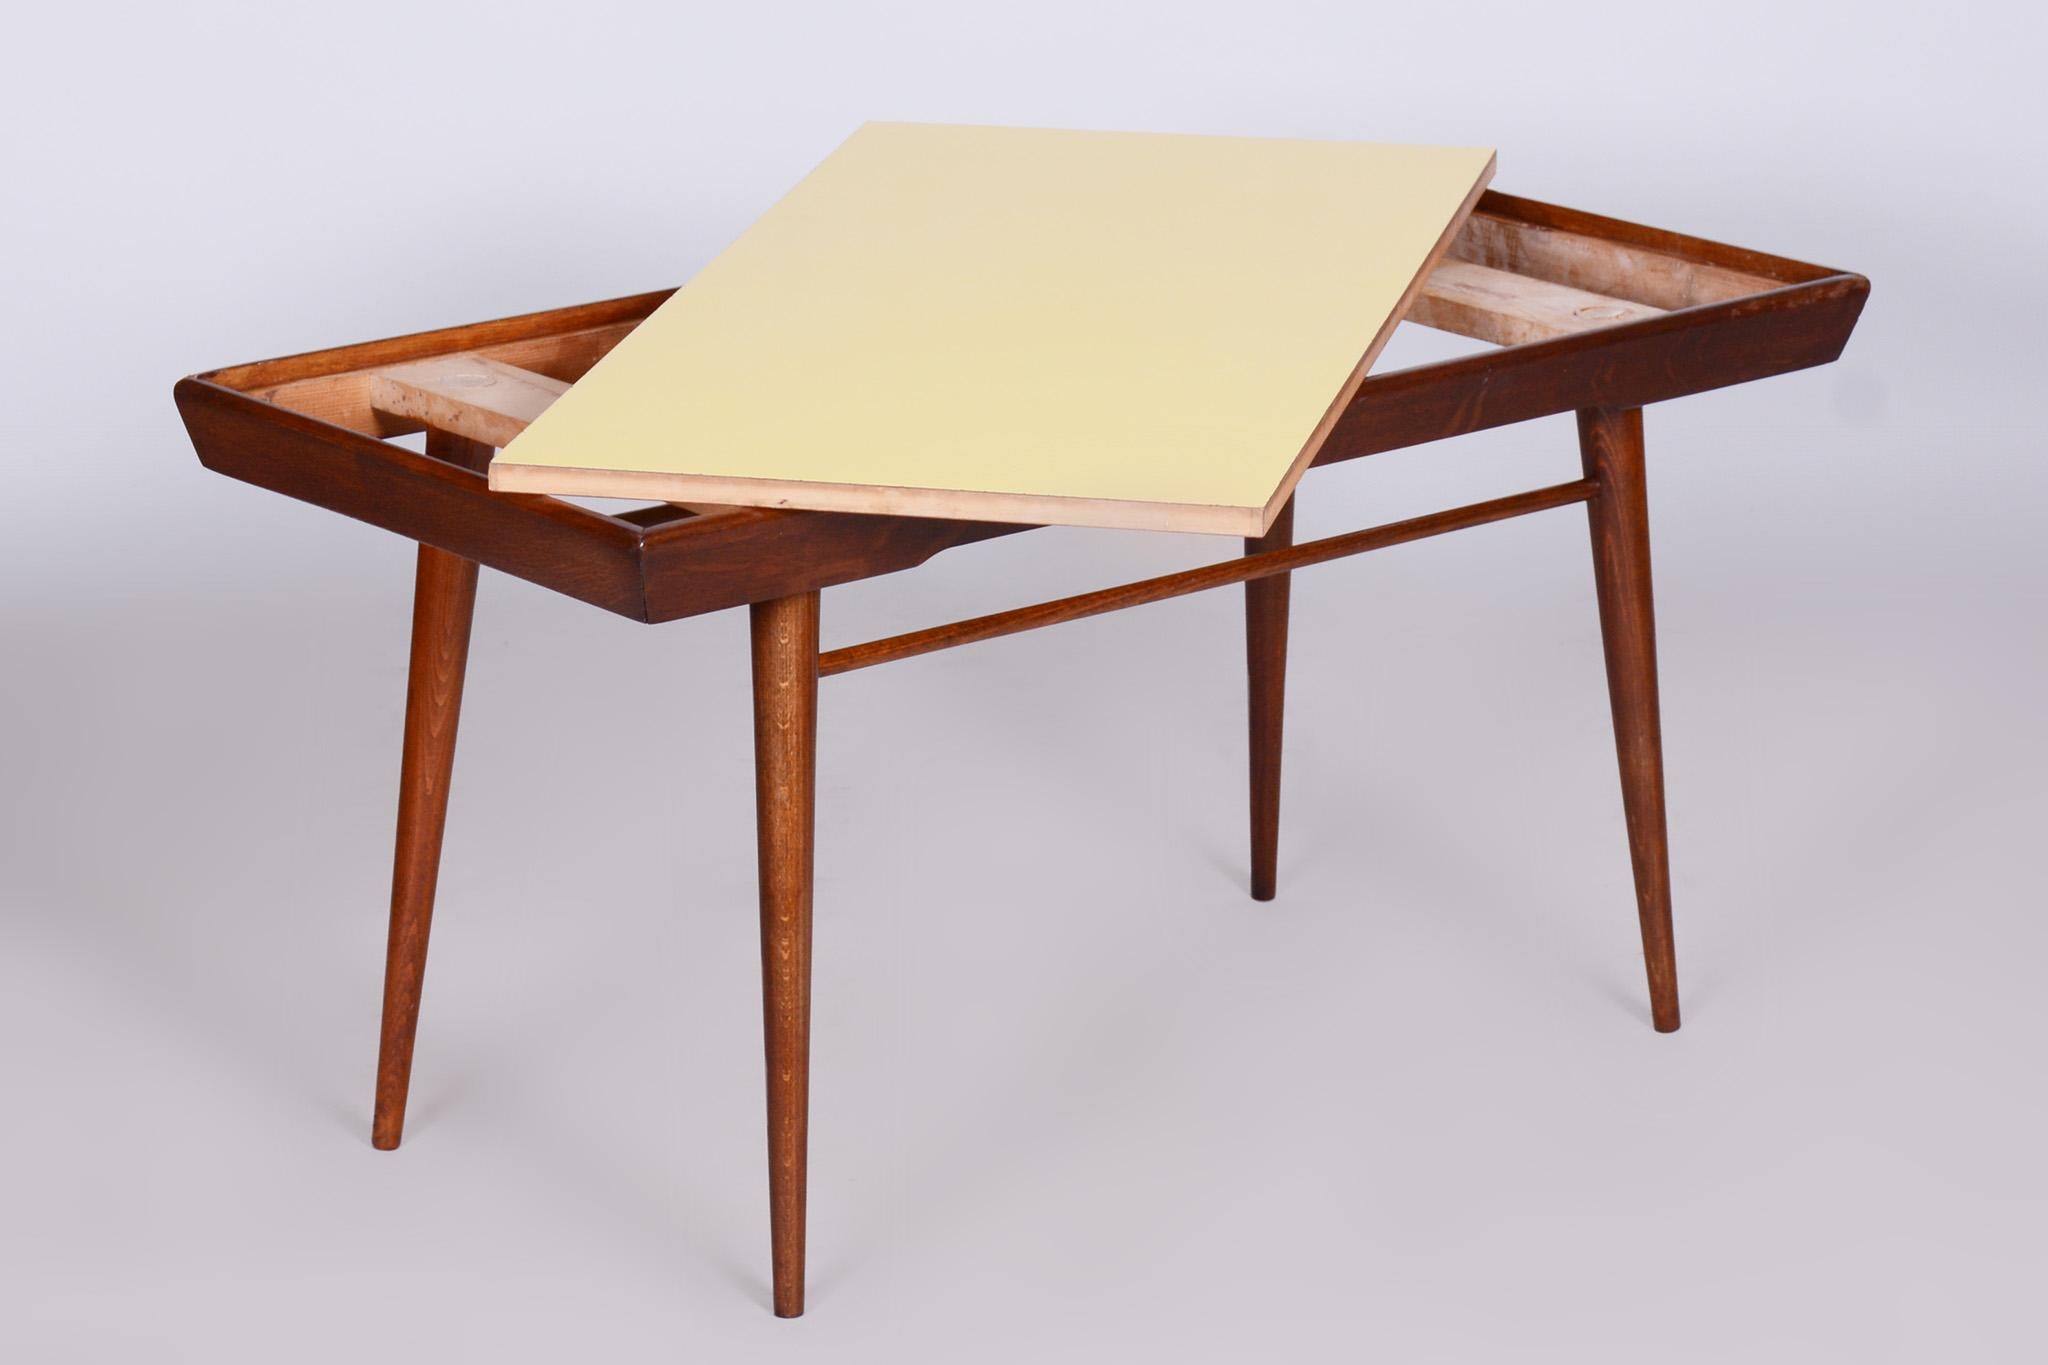 Restored Midcentury Coffee Table, Swivel Top, Beech, Umakart, Czechia, 1950s For Sale 5